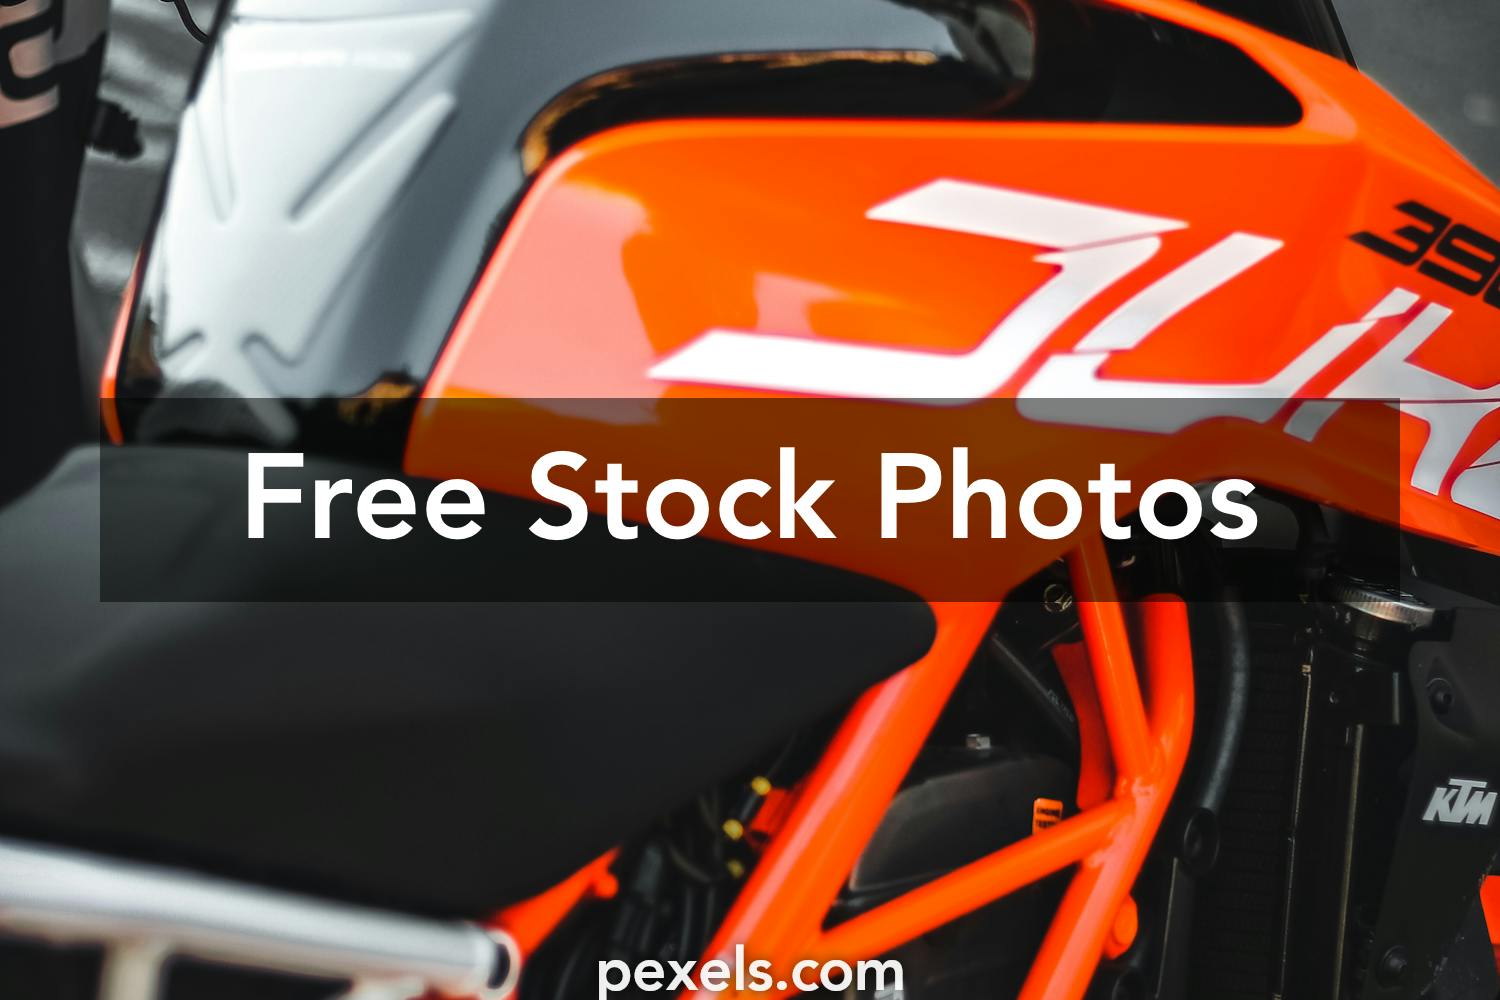 Ktm Bike Photos, Download The BEST Free Ktm Bike Stock Photos & HD Images